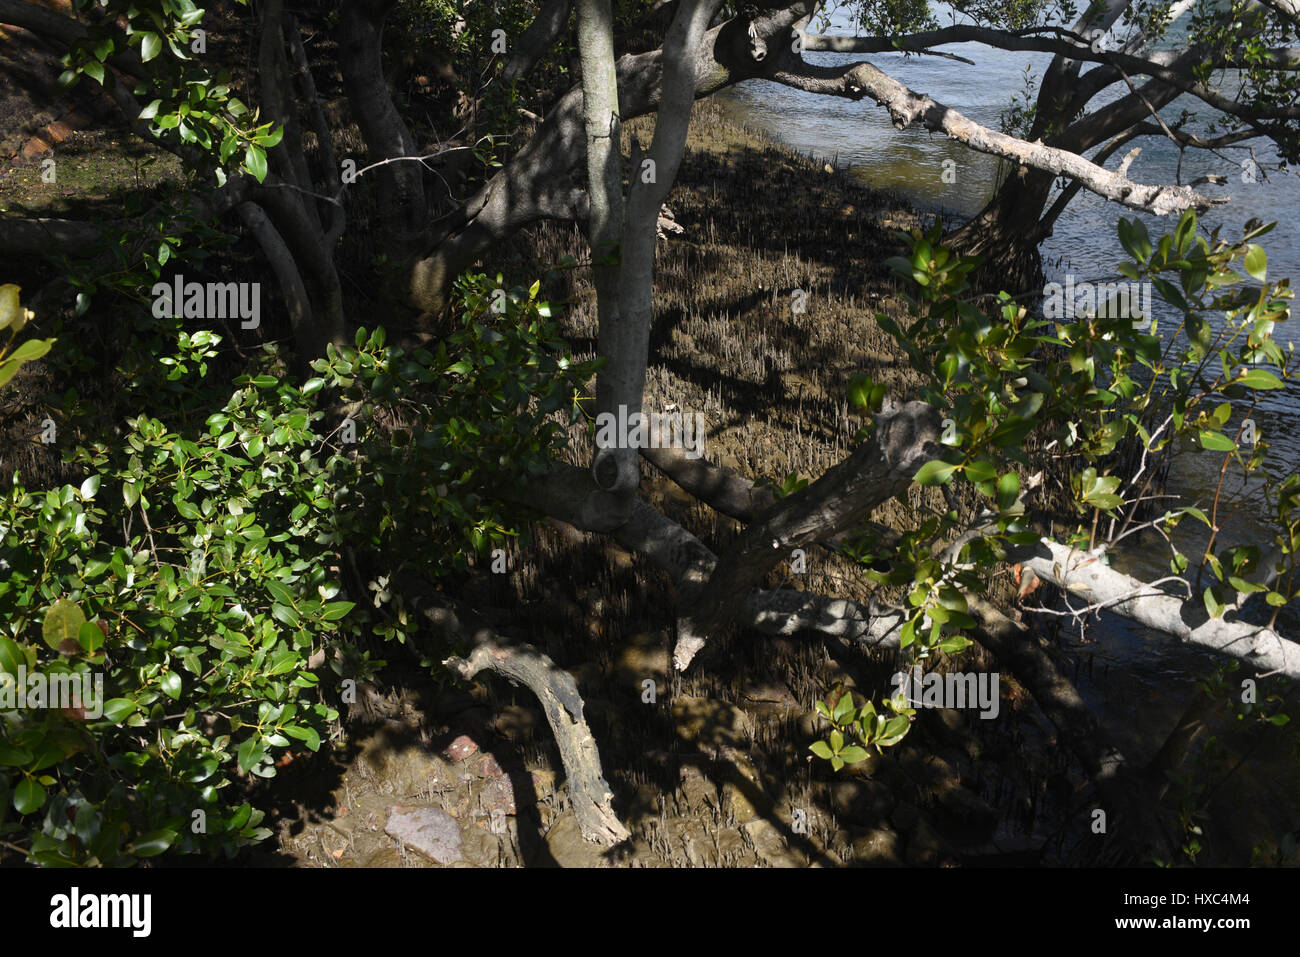 Brisbane, Australia: Mangrovie sulle rive del Fiume Brisbane Foto Stock